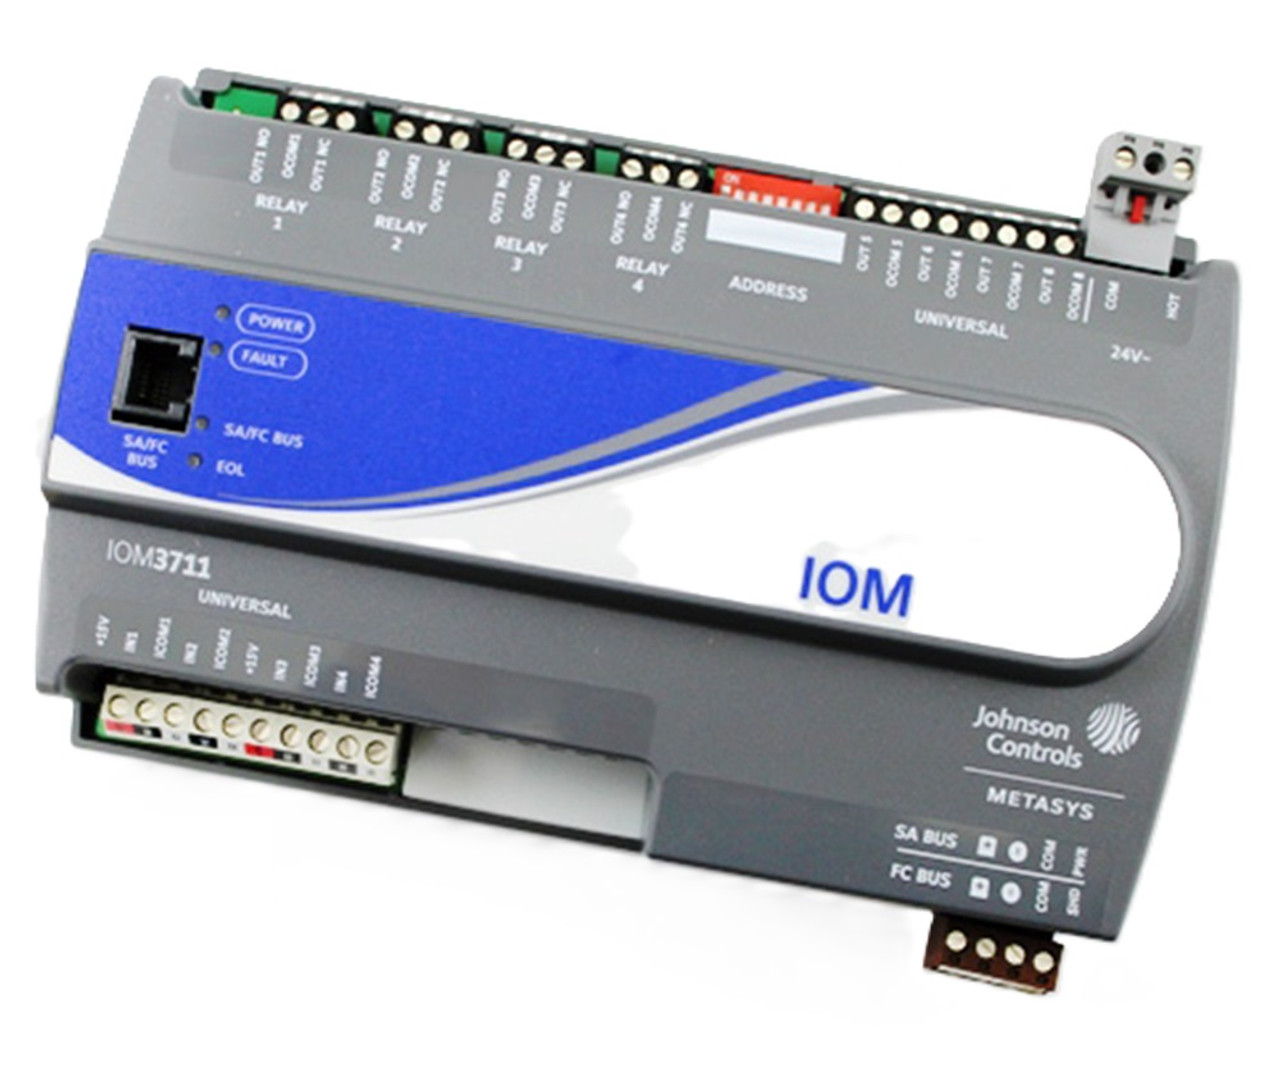 Johnson Controls MS-IOM3711-0 Metasys IOM3711 Input/Output Module [New]